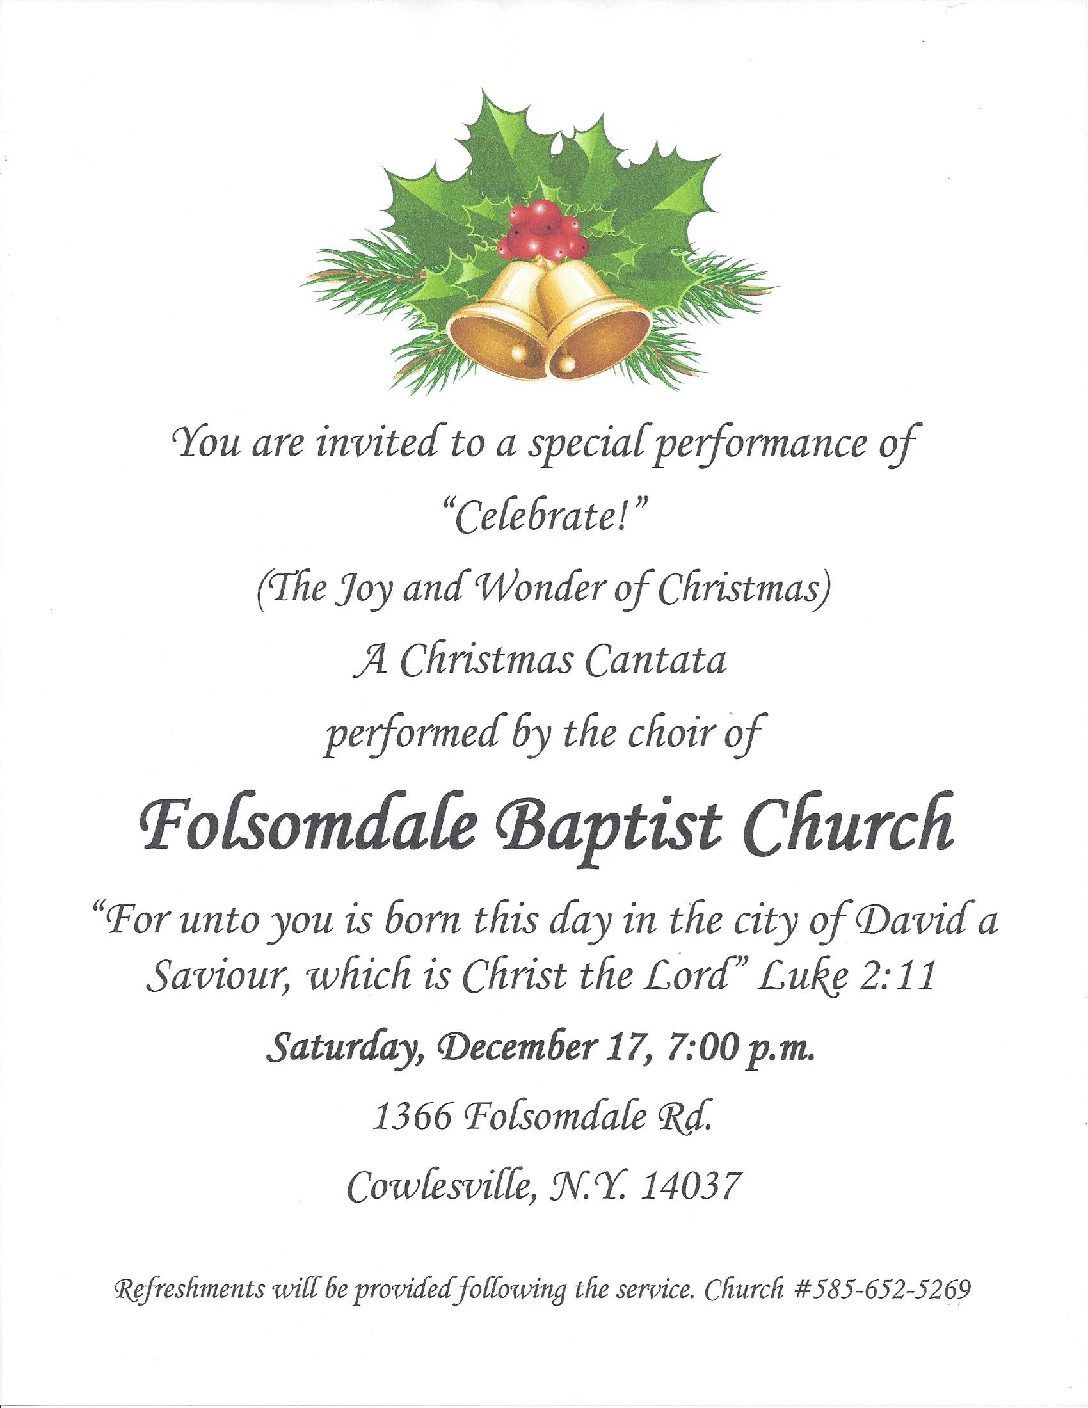 Concert at Folsomdale Baptist Church